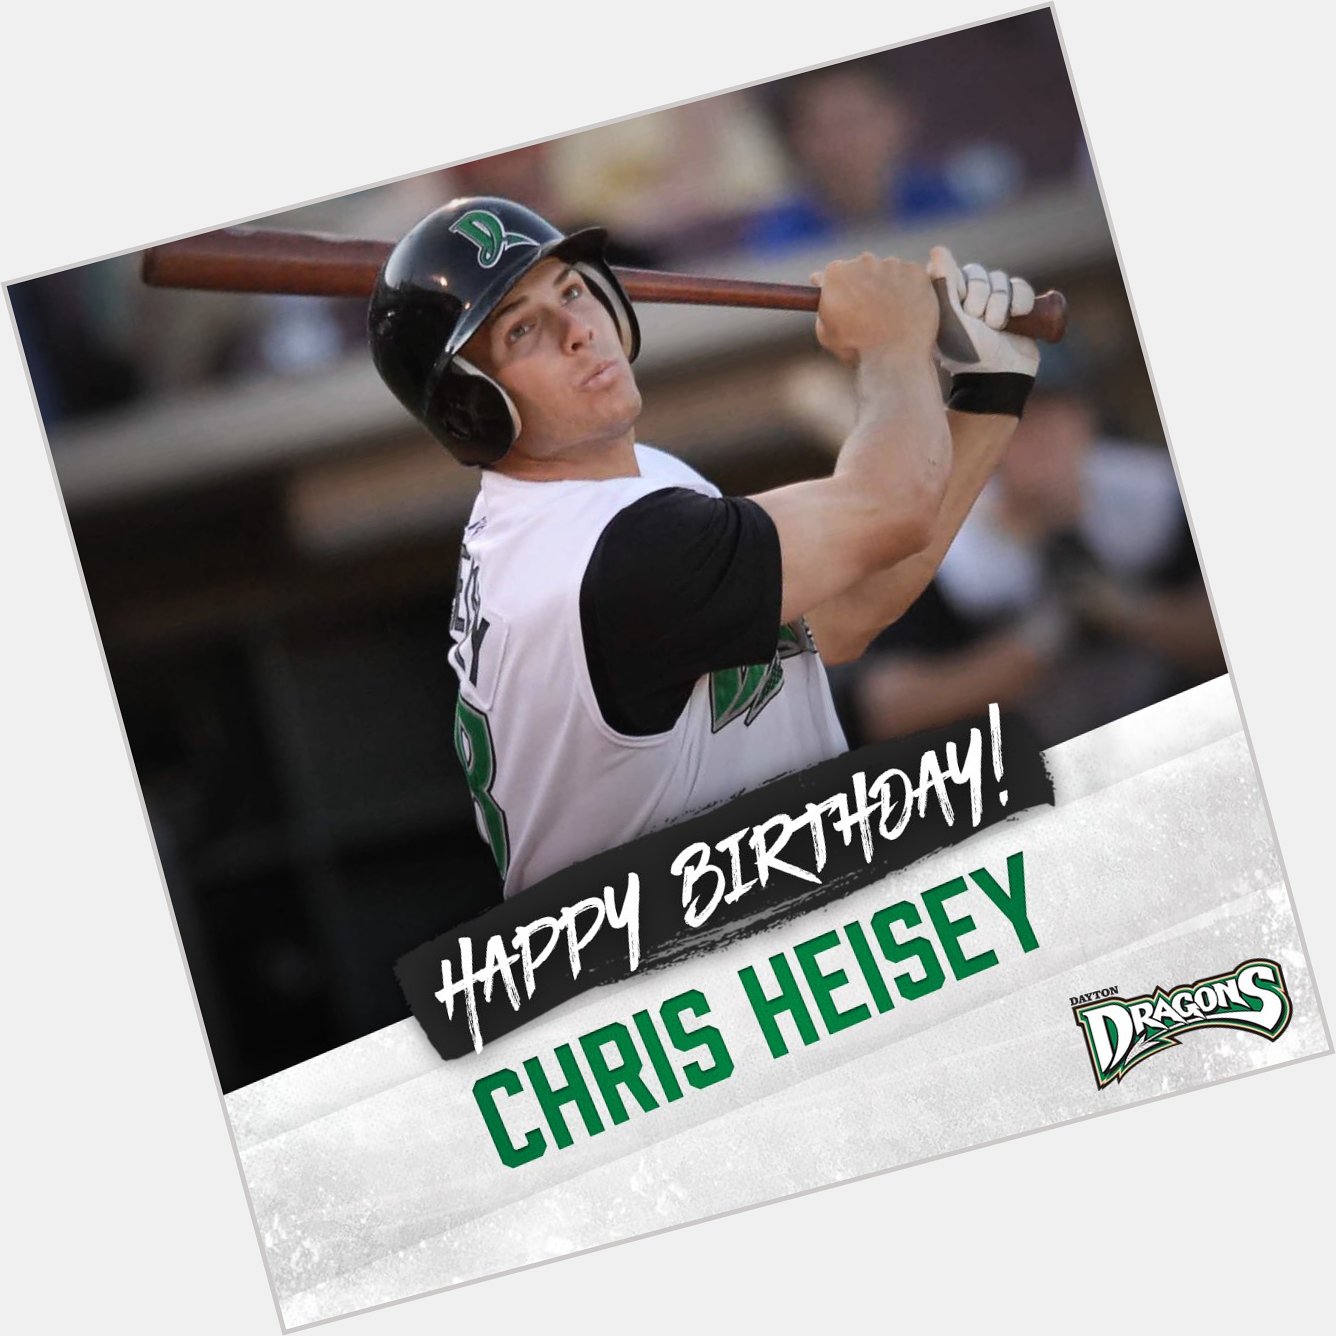 Happy birthday to 2007 Dragons OF, Chris Heisey! 